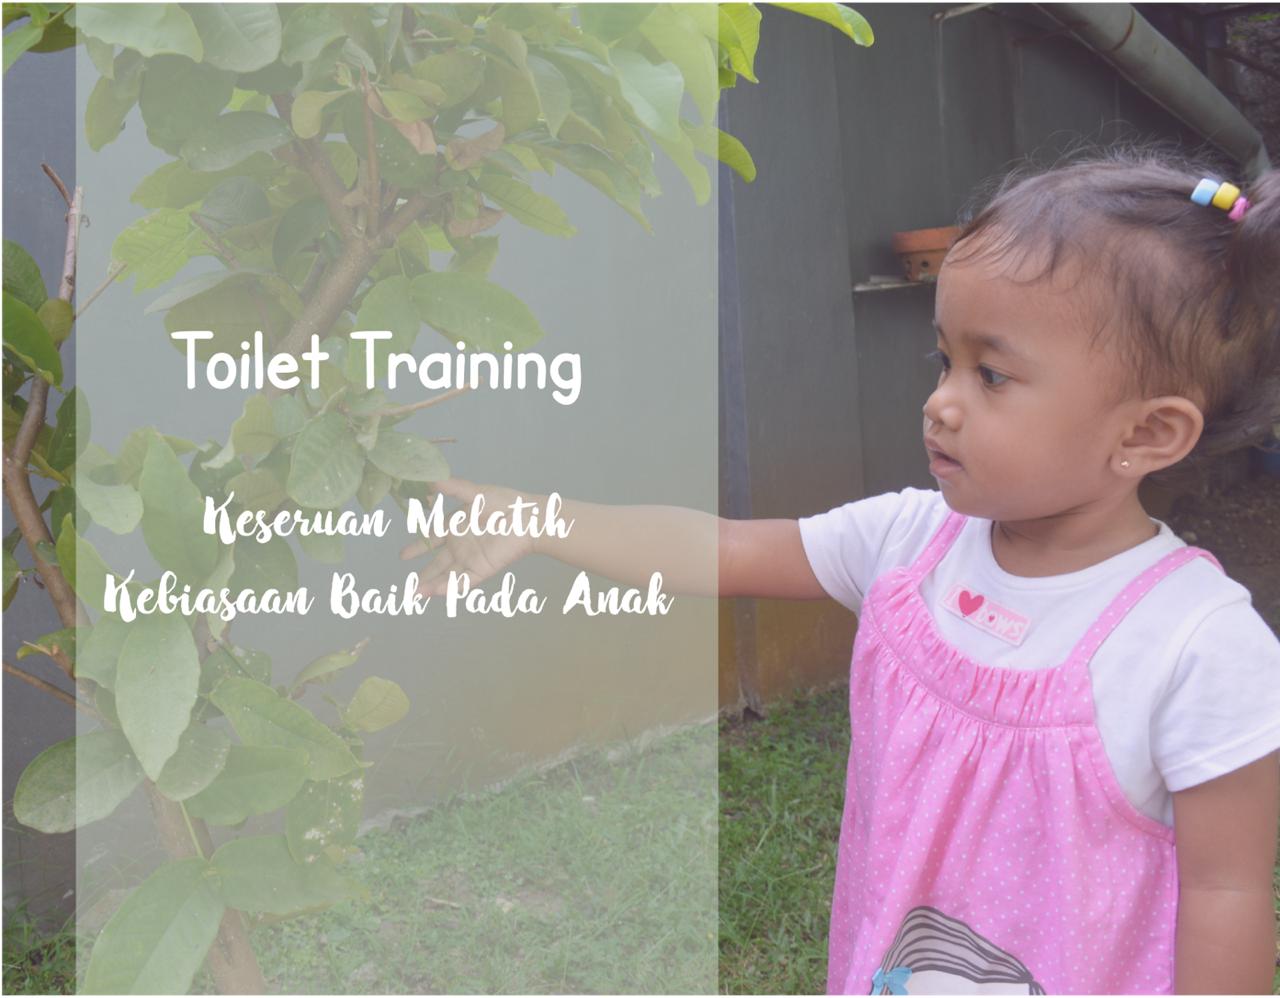 Toilet Training: Keseruan Melatih Kebiasaan Baik Pada Anak